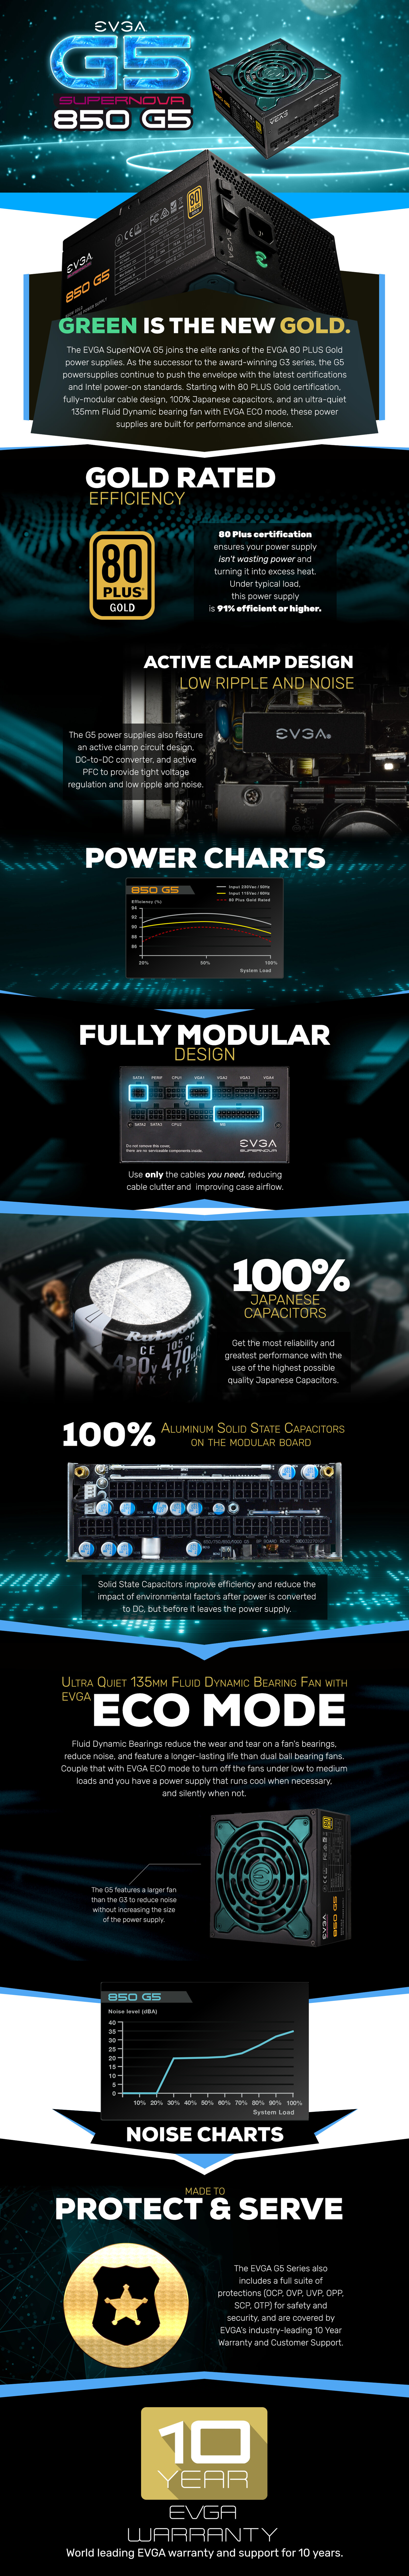 A large marketing image providing additional information about the product EVGA SuperNOVA 850 G5 850W Gold ATX Modular PSU - Additional alt info not provided